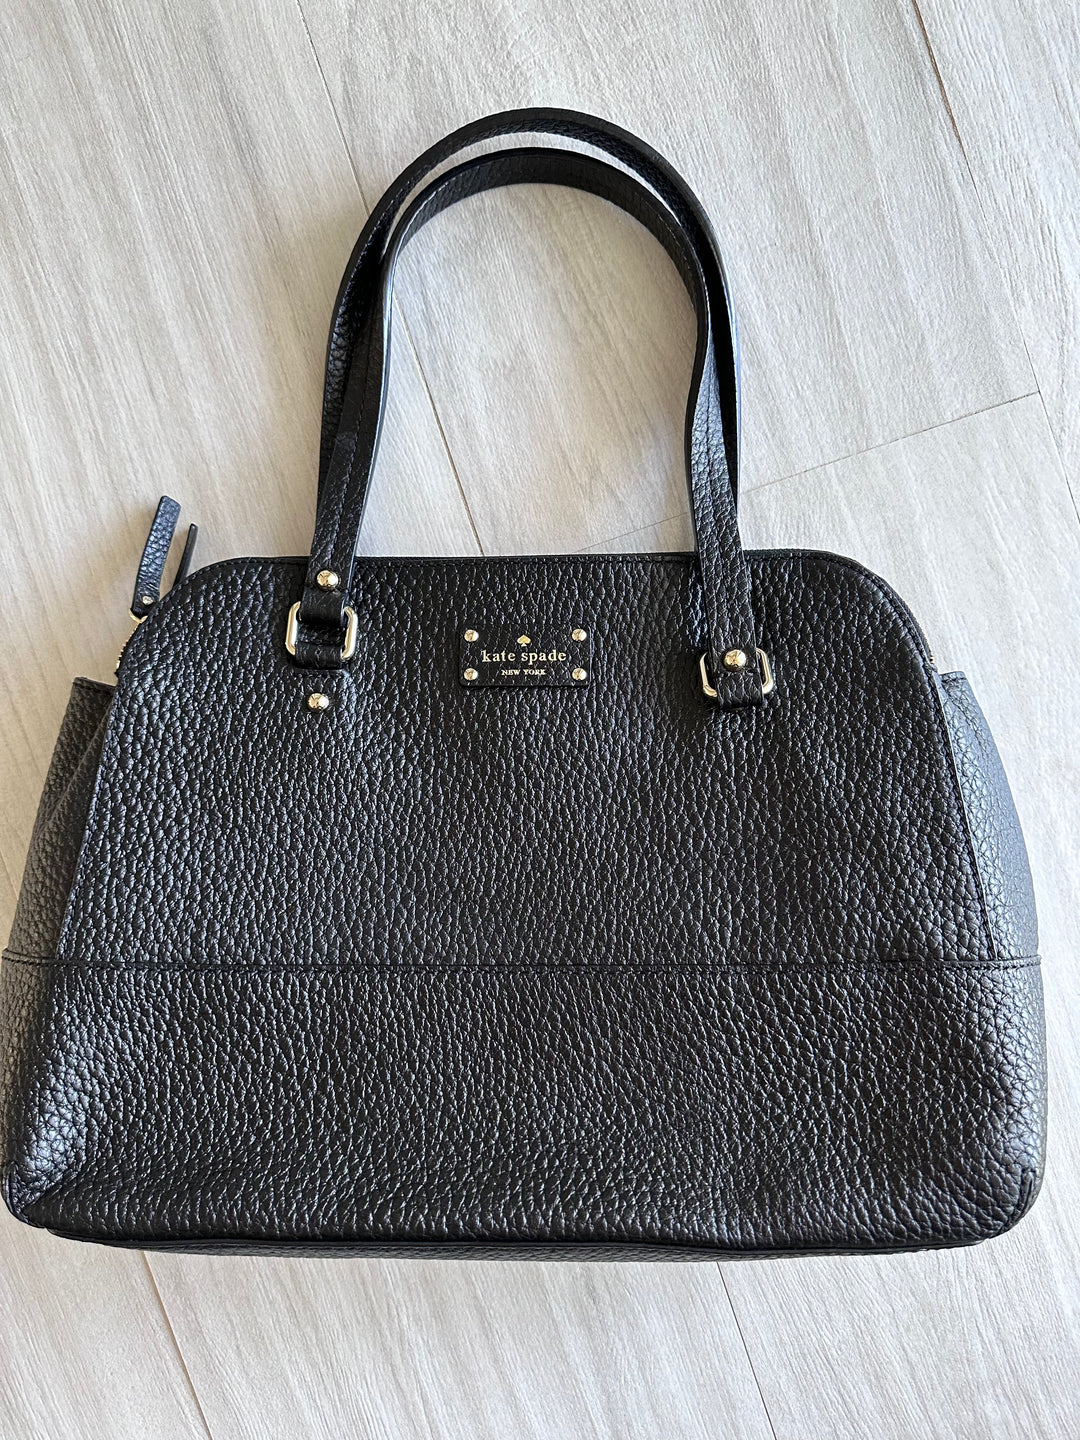 Secondhand Kate Spade Handbag